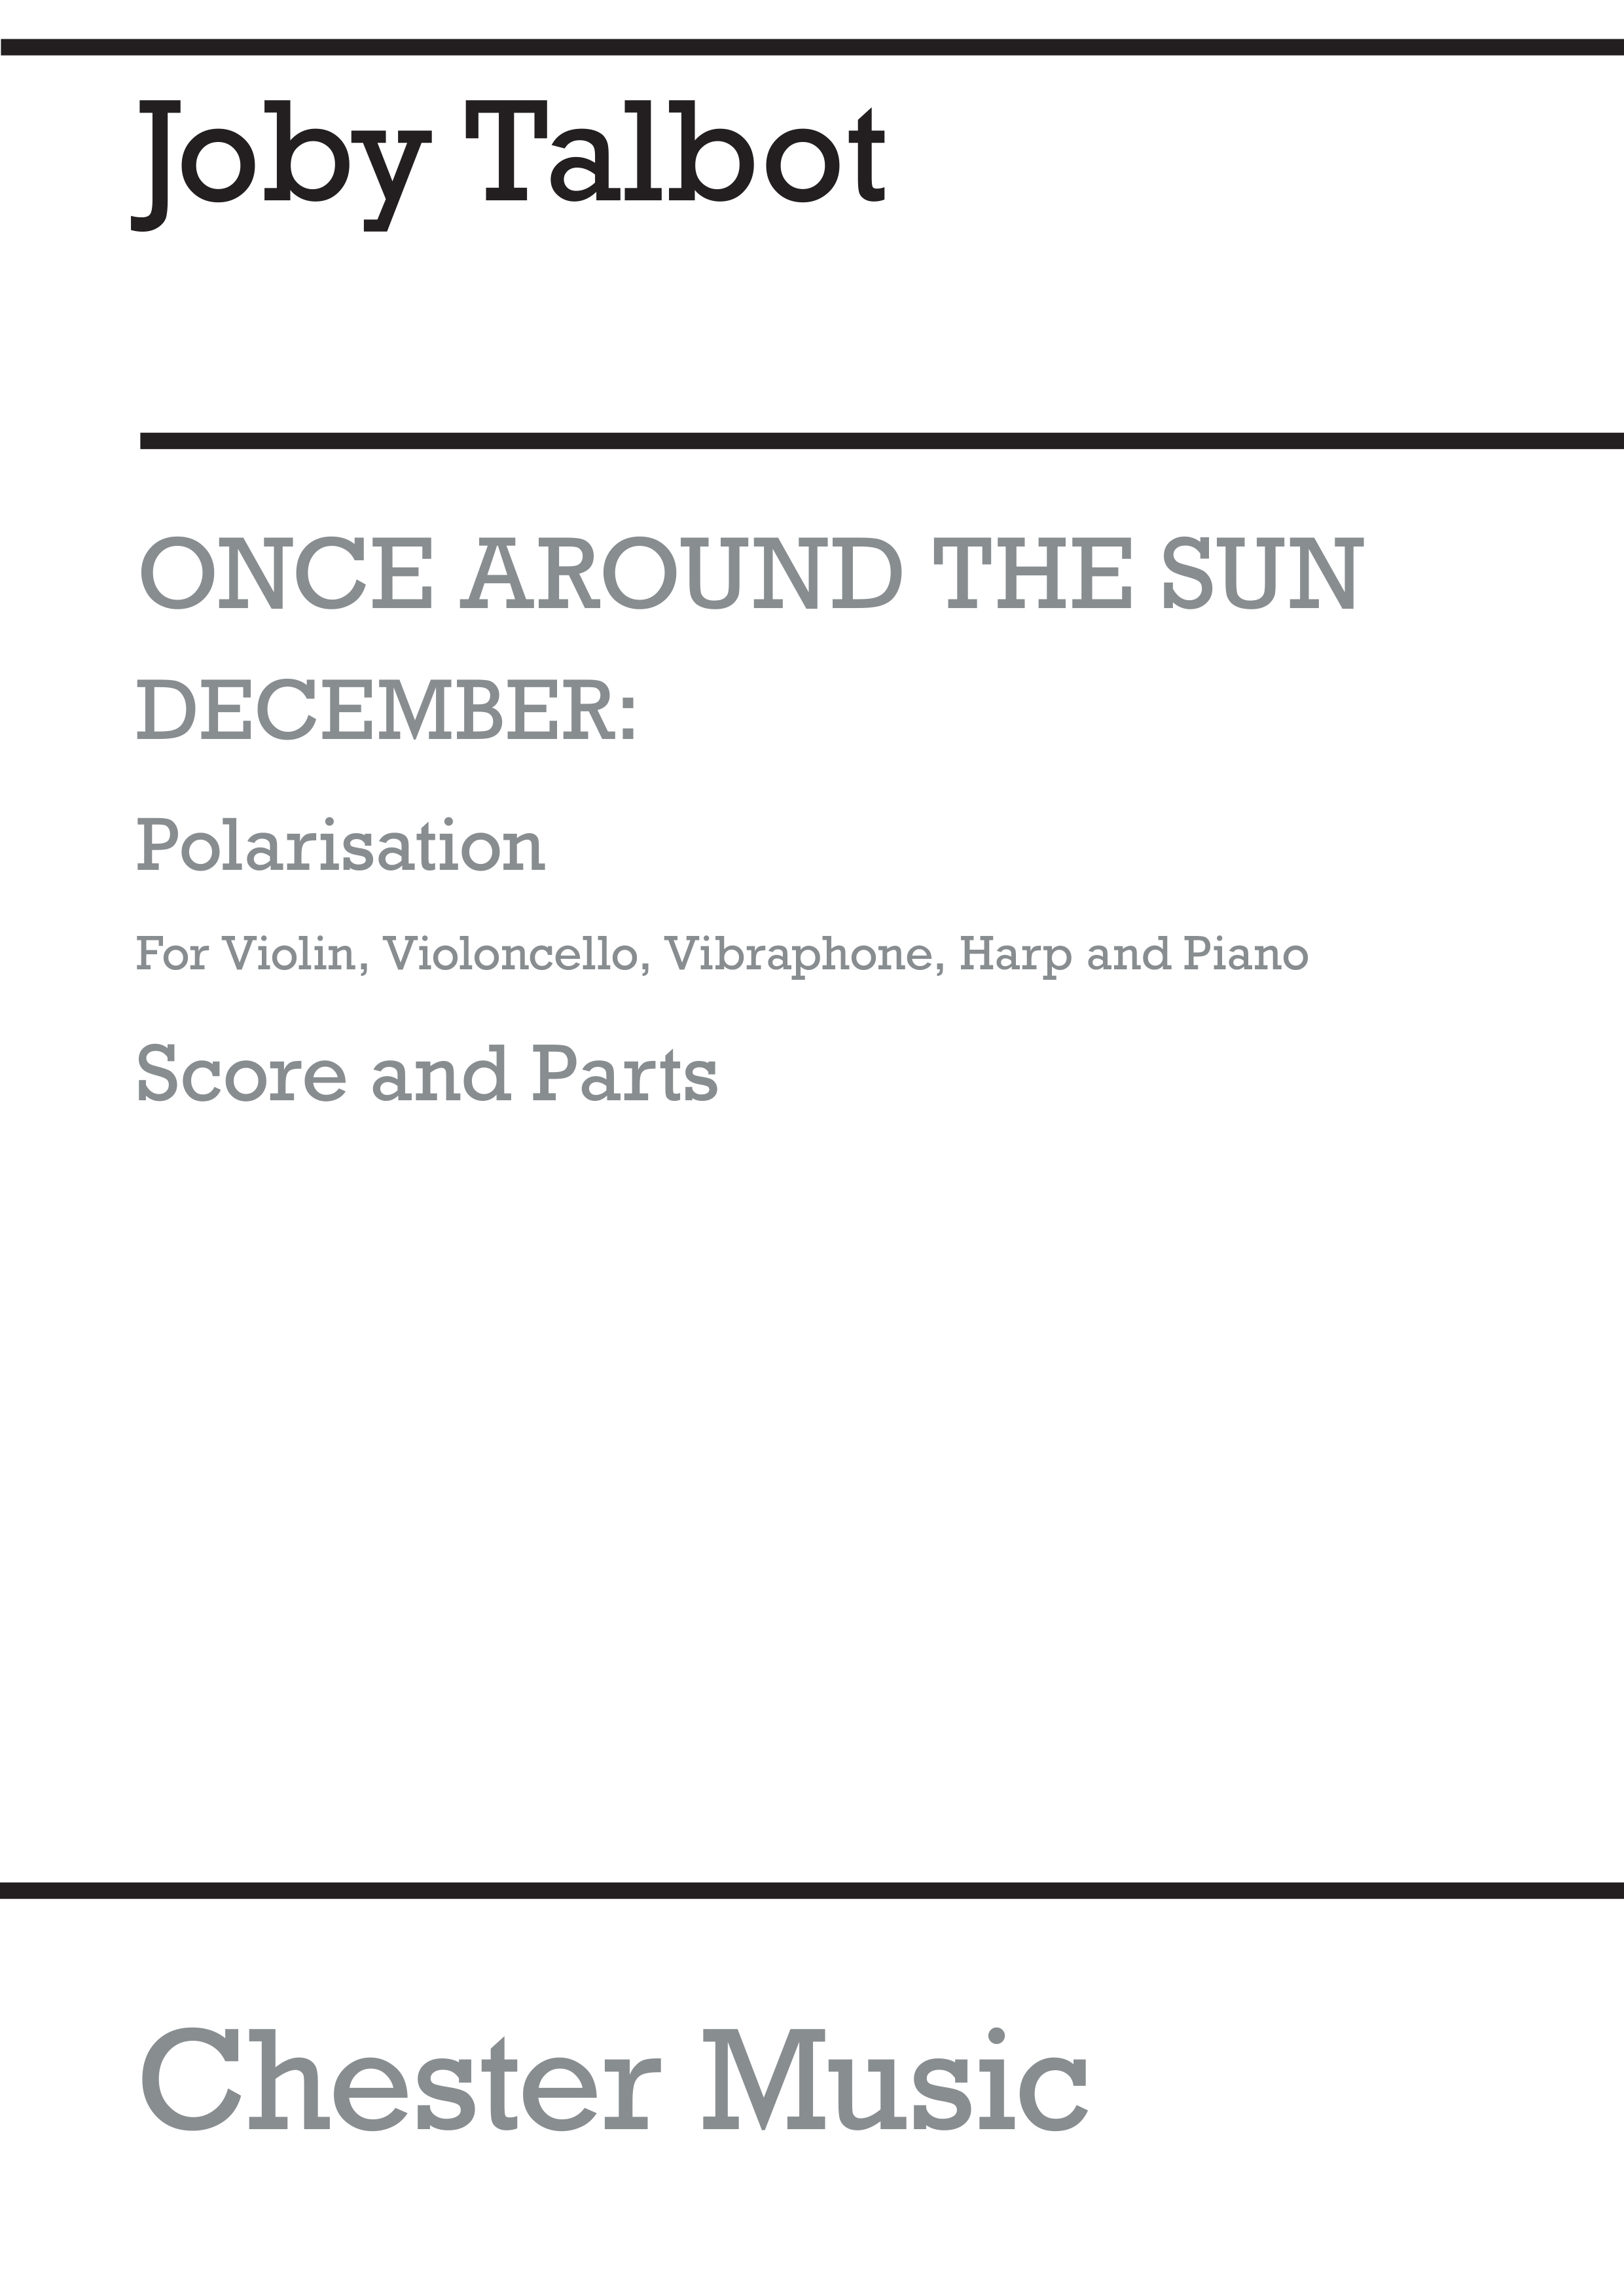 Joby Talbot: December - Polarisation: Ensemble: Score and Parts